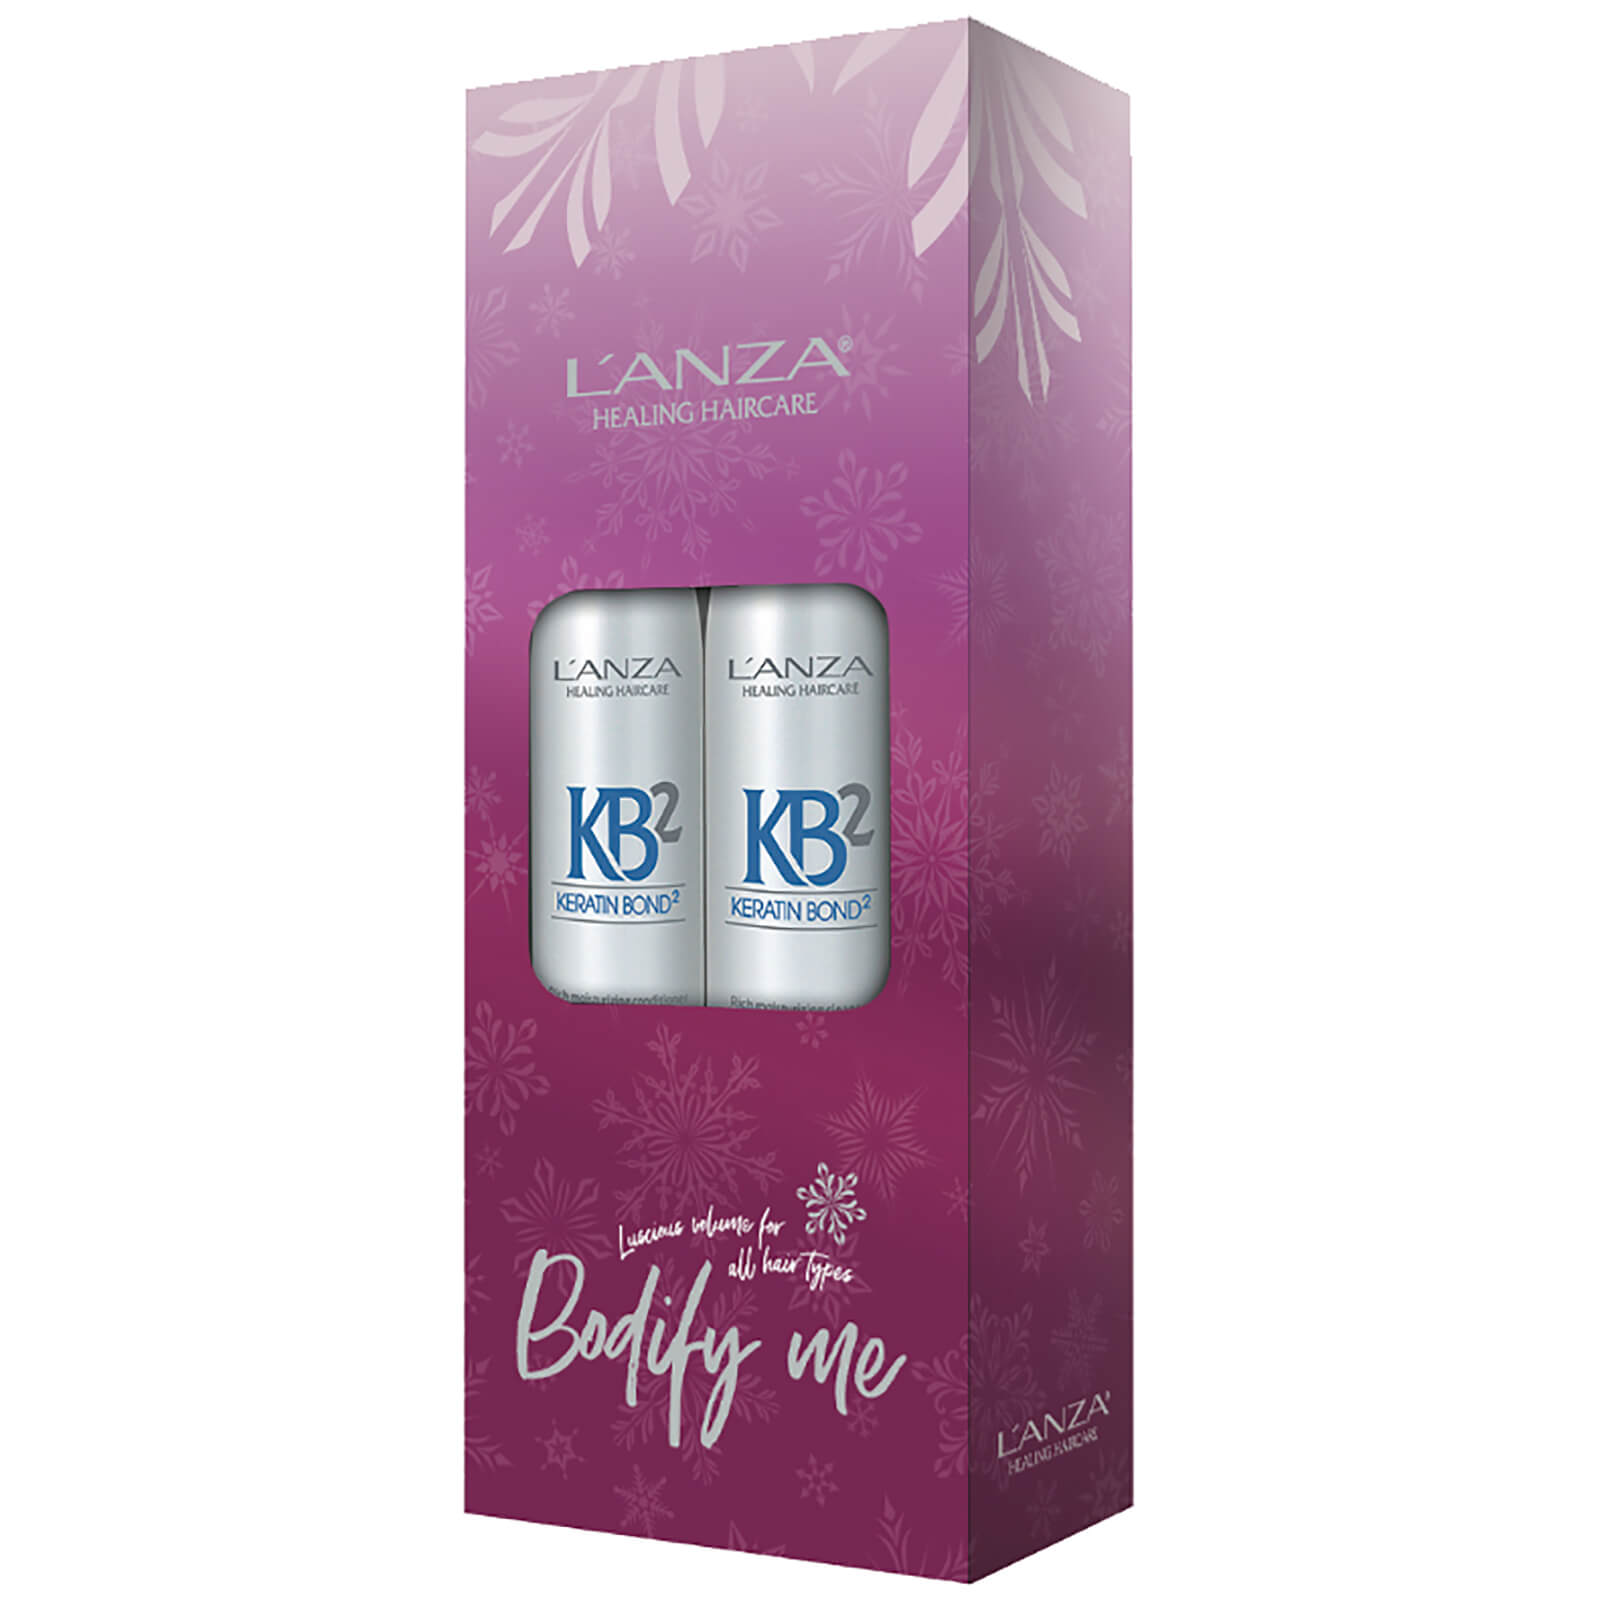 L'Anza KB2 Bodify Me Duo Box